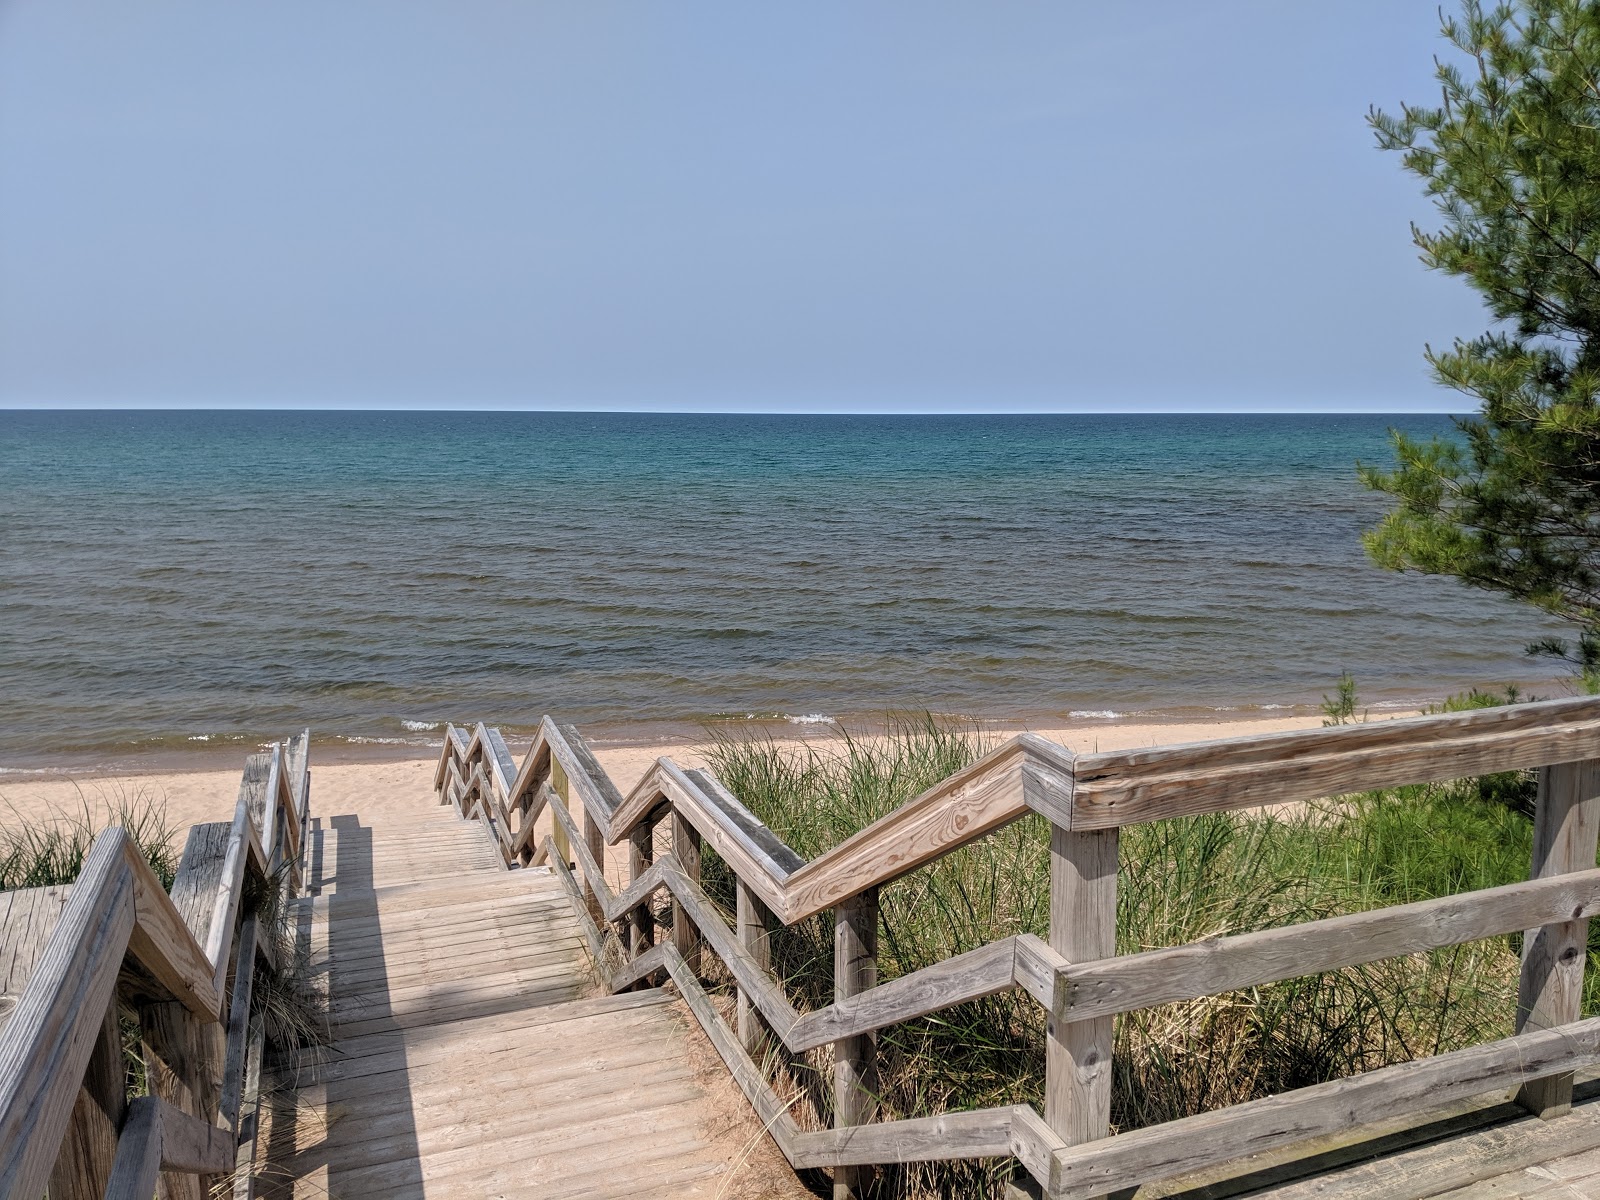 Fotografie cu Lake Superior Beach - locul popular printre cunoscătorii de relaxare